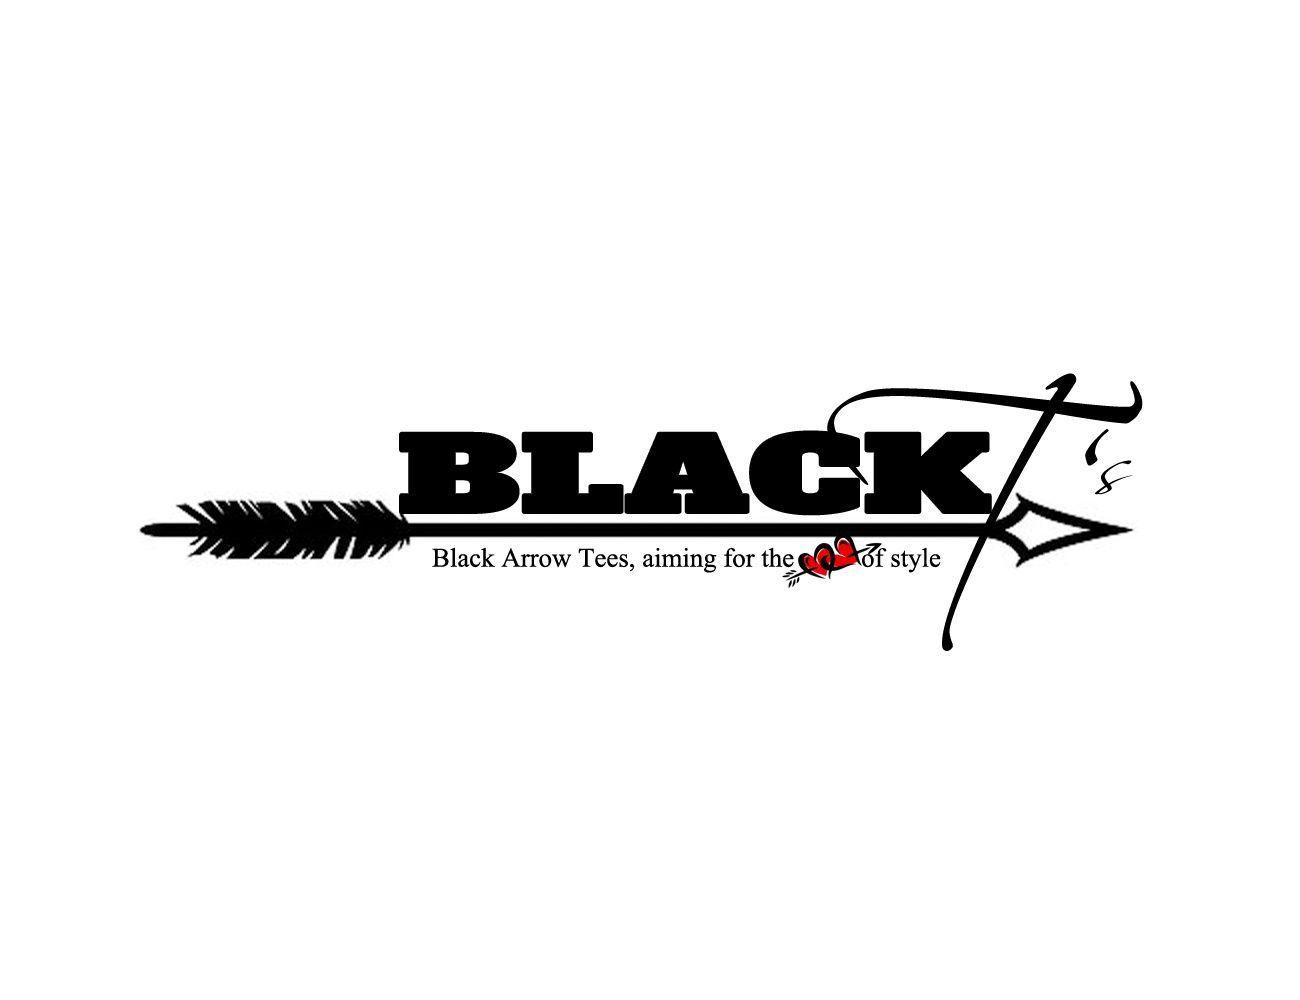 Black Arrow Logo - Black Arrow Tees in Harrisburg - Black Arrow Tees